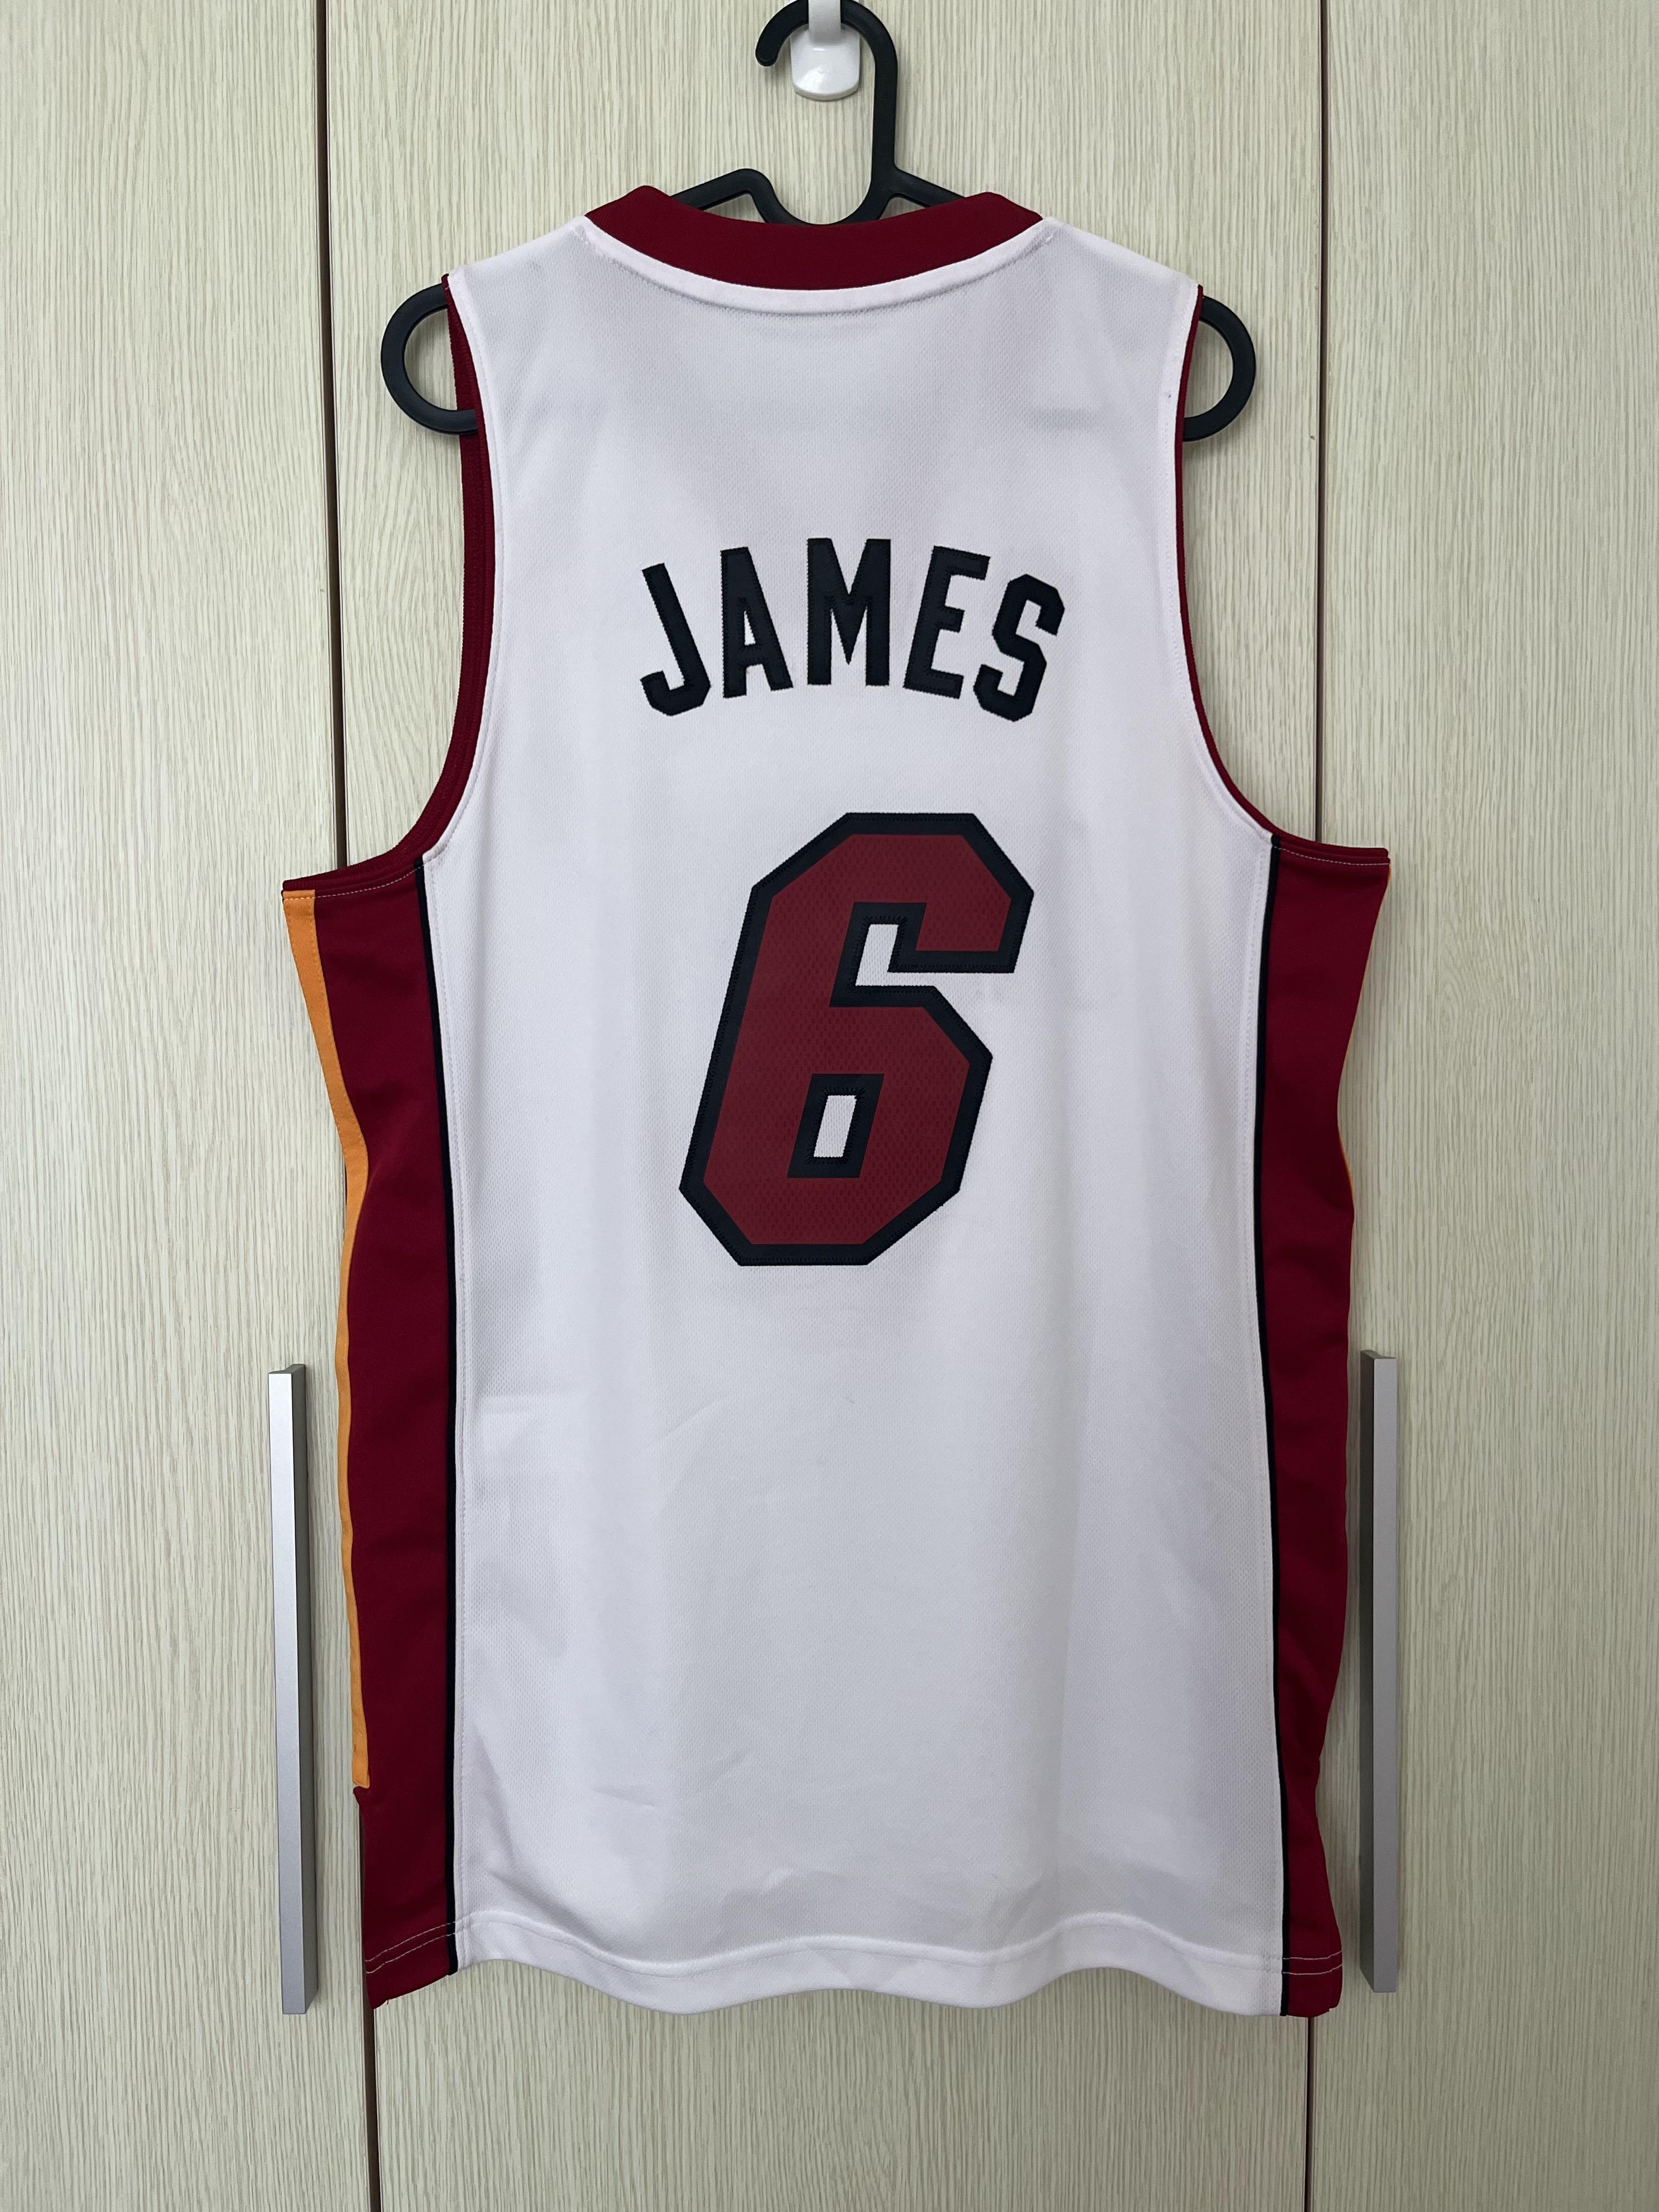 Rare Adidas NBA Miami Heat LeBron James 2012 Champions Authentics Jersey L  44